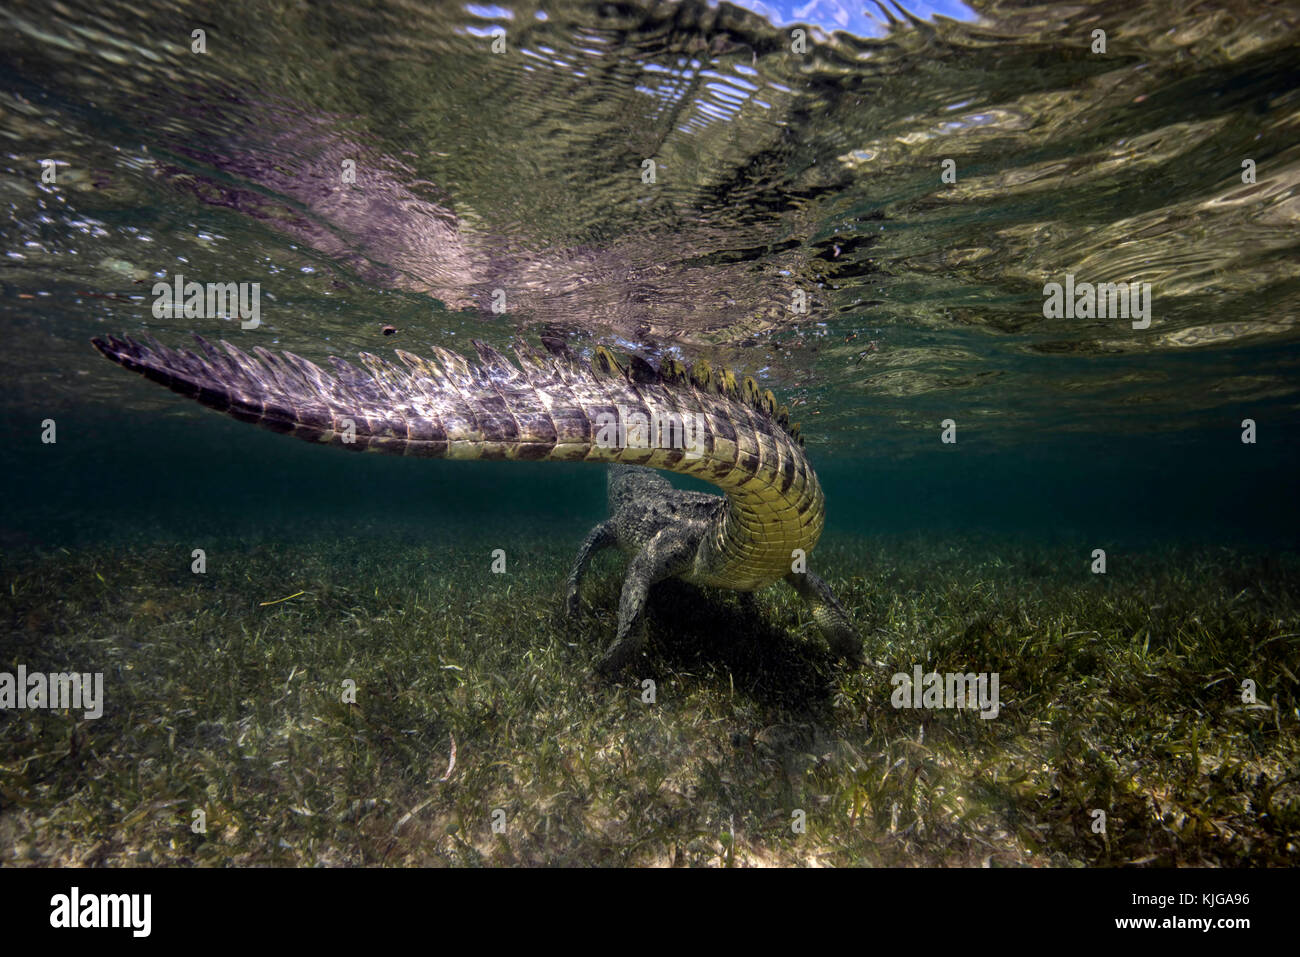 Krokodiltauchen, Mexiko ; Yukatan ; Krokodil ; Spitzkrokodil Salzwasserkrokodil echte Krokodile ; ; ; ; | Reptil amerikanisches Krokodil crocodile ; Banque D'Images